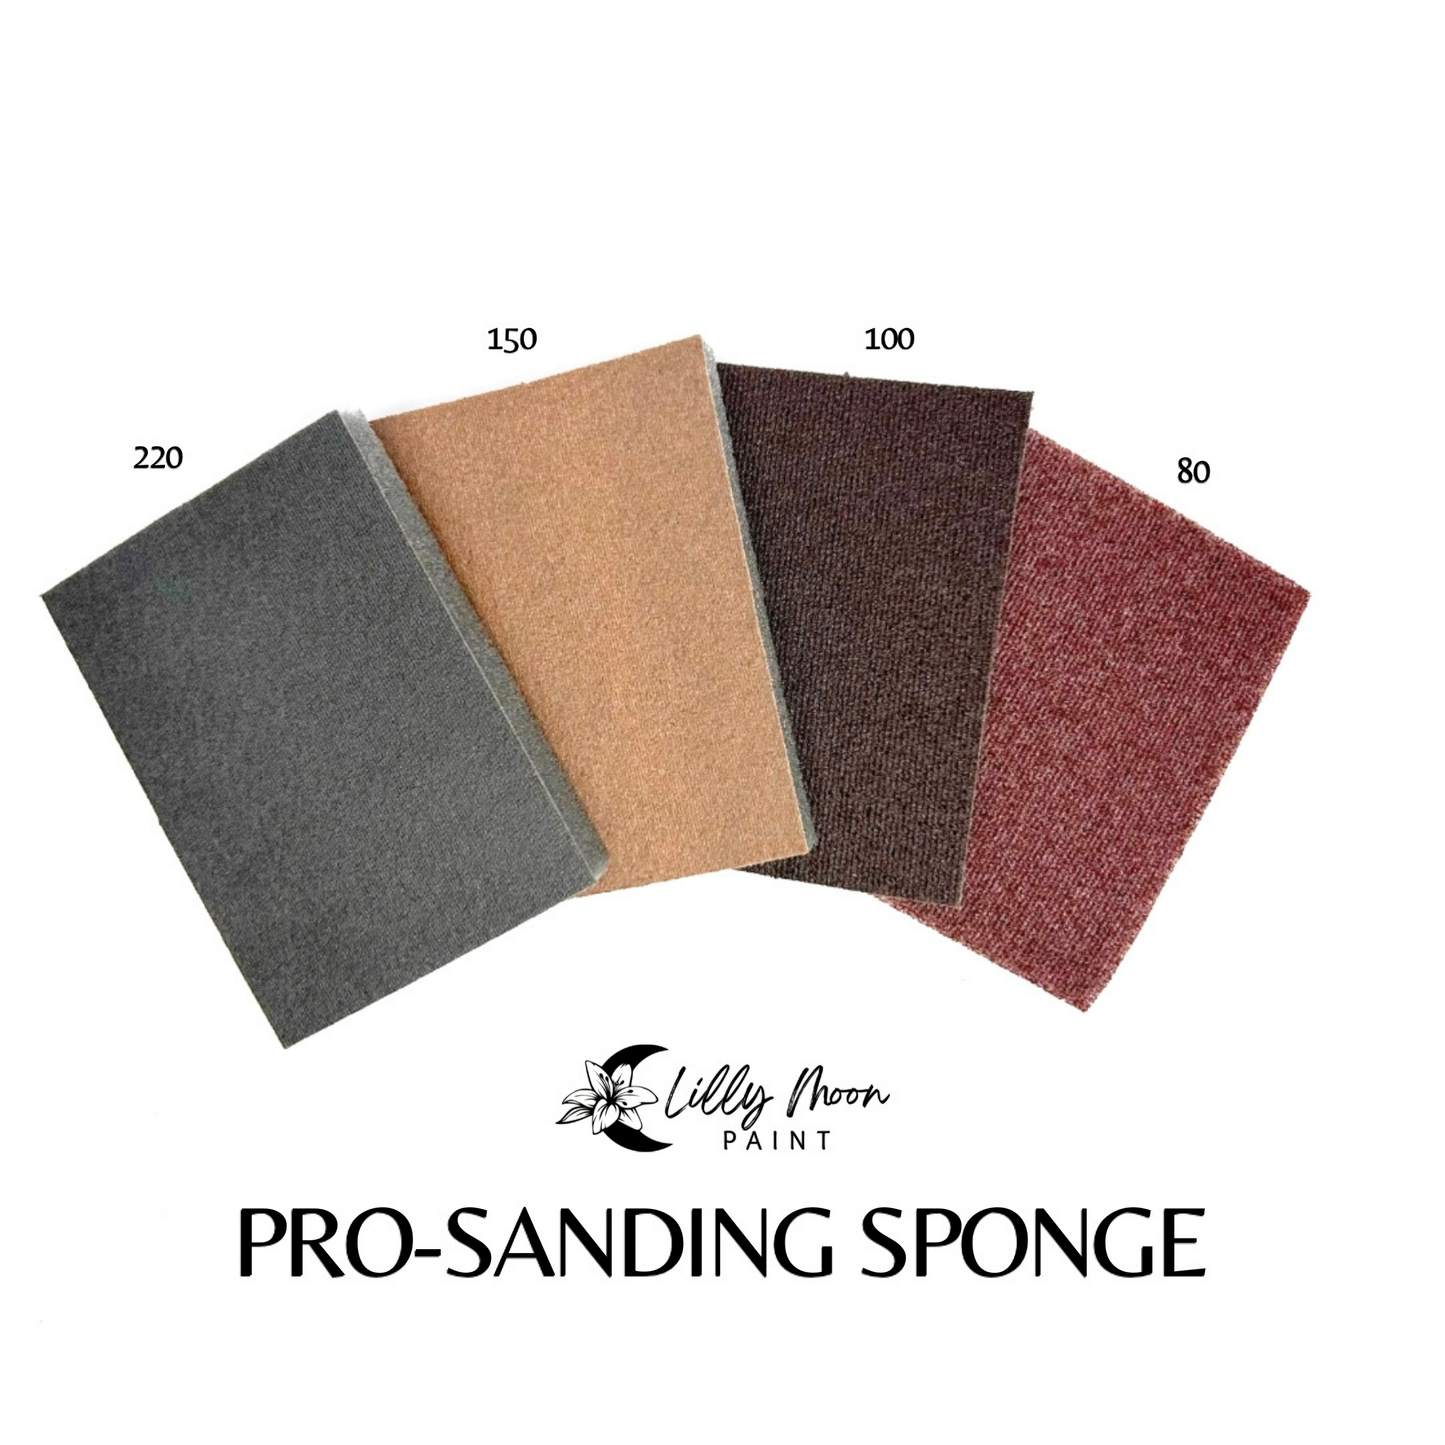 Pro-Sanding Sponge